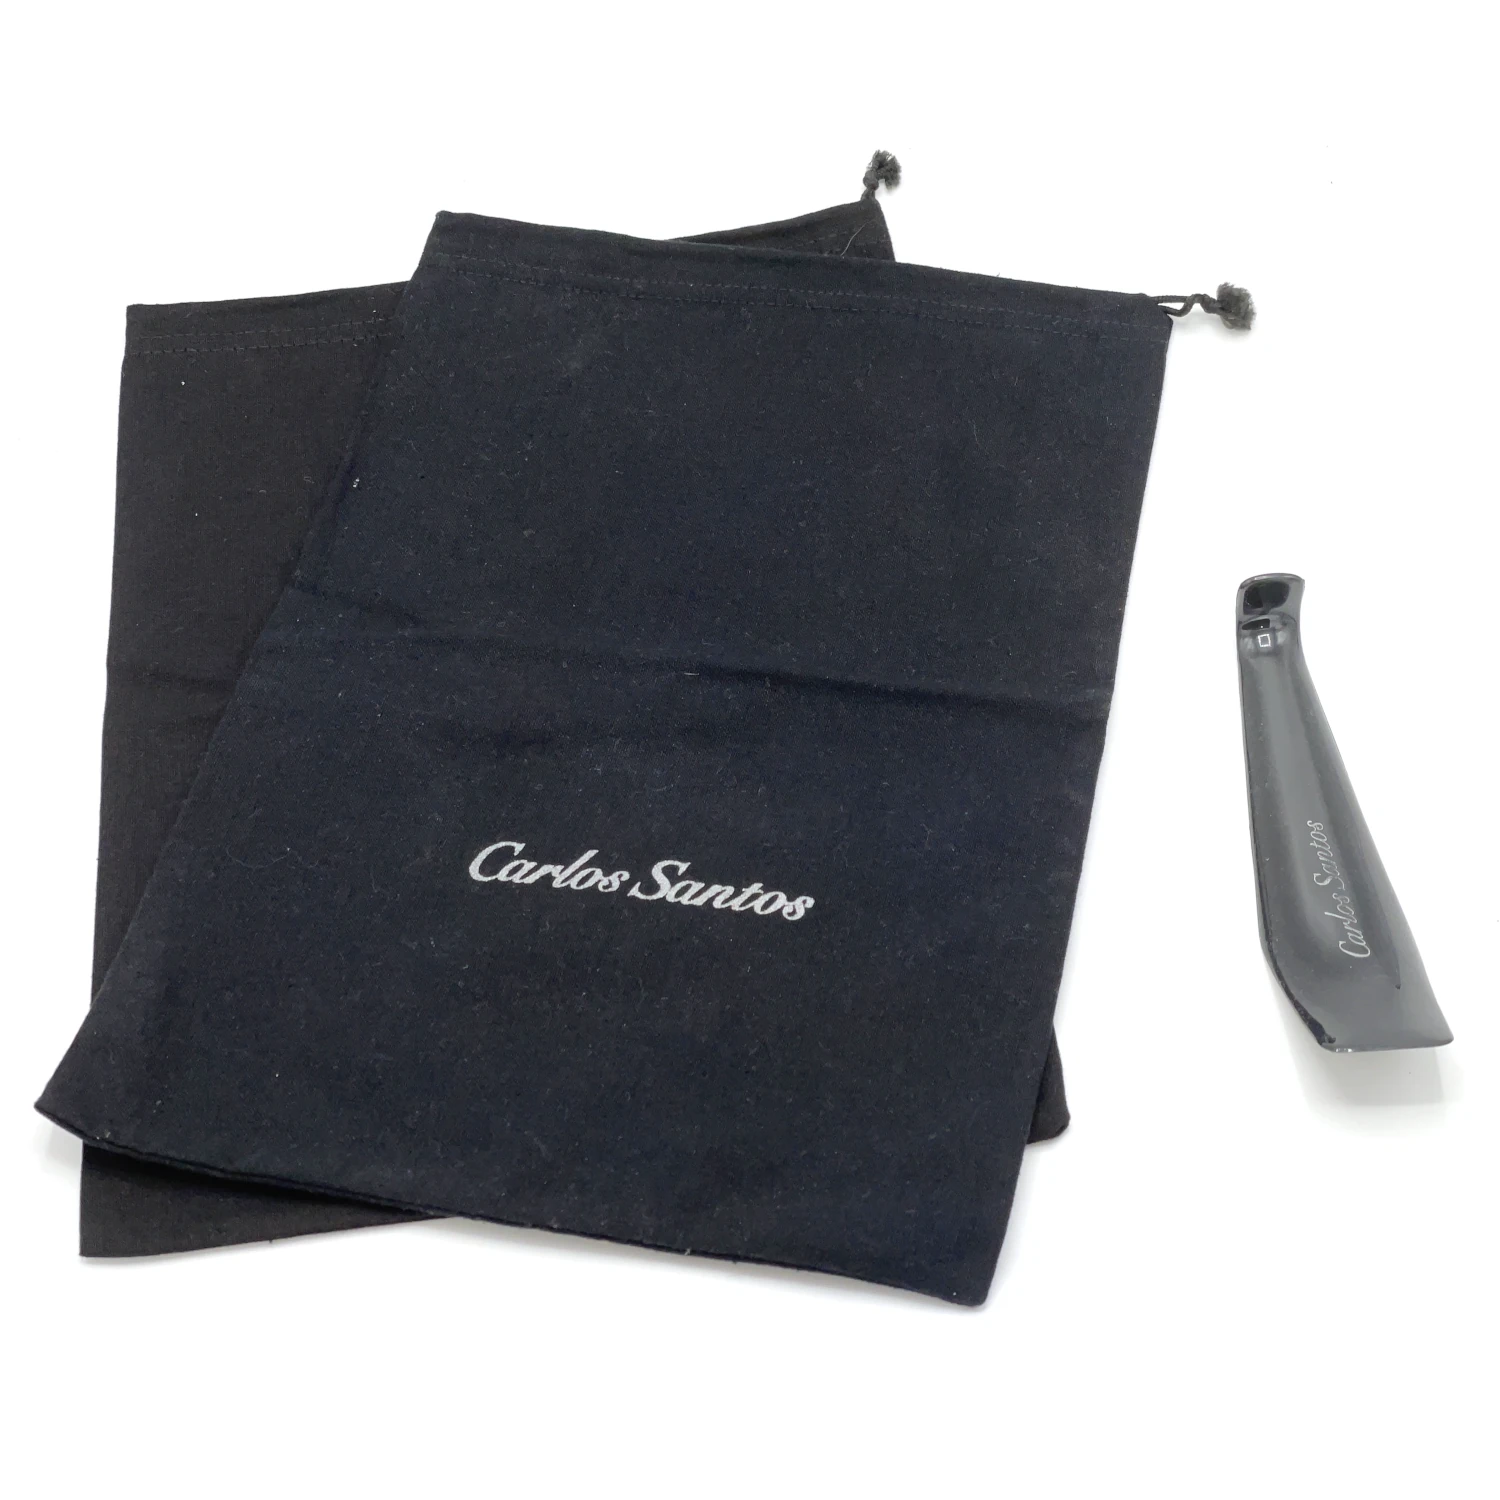 Carlos Santos Boot bags - Pediwear Accessories